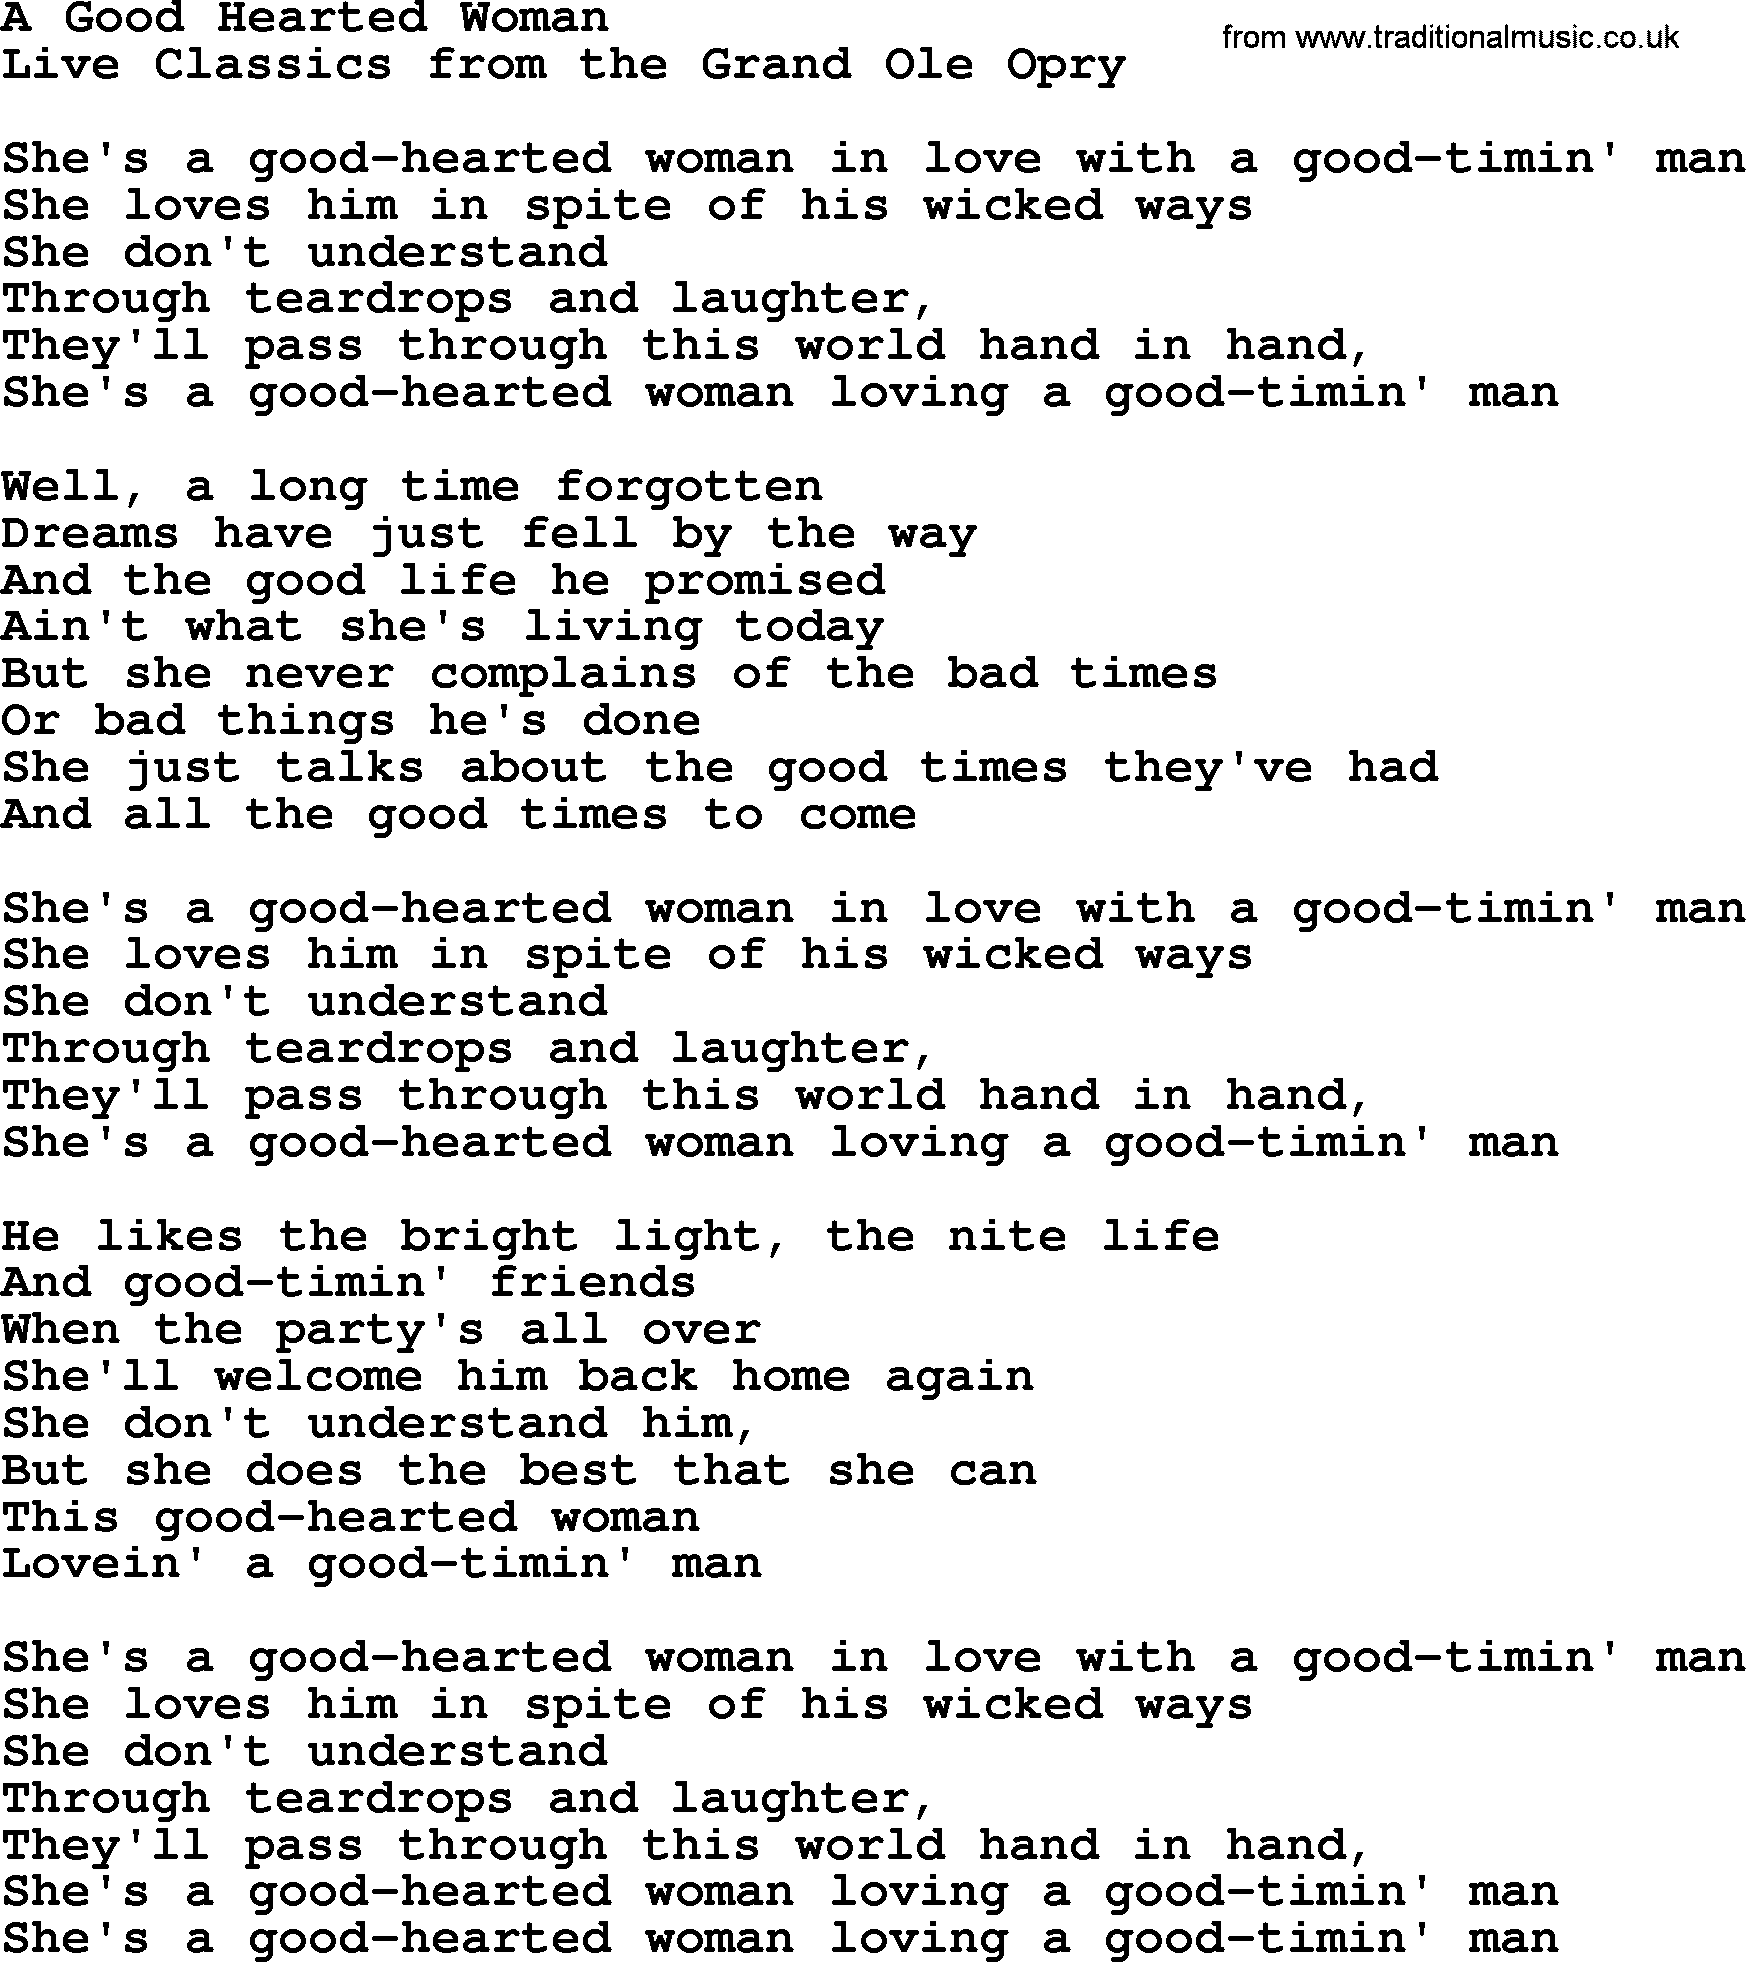 Marty Robbins song: A Good Hearted Woman, lyrics